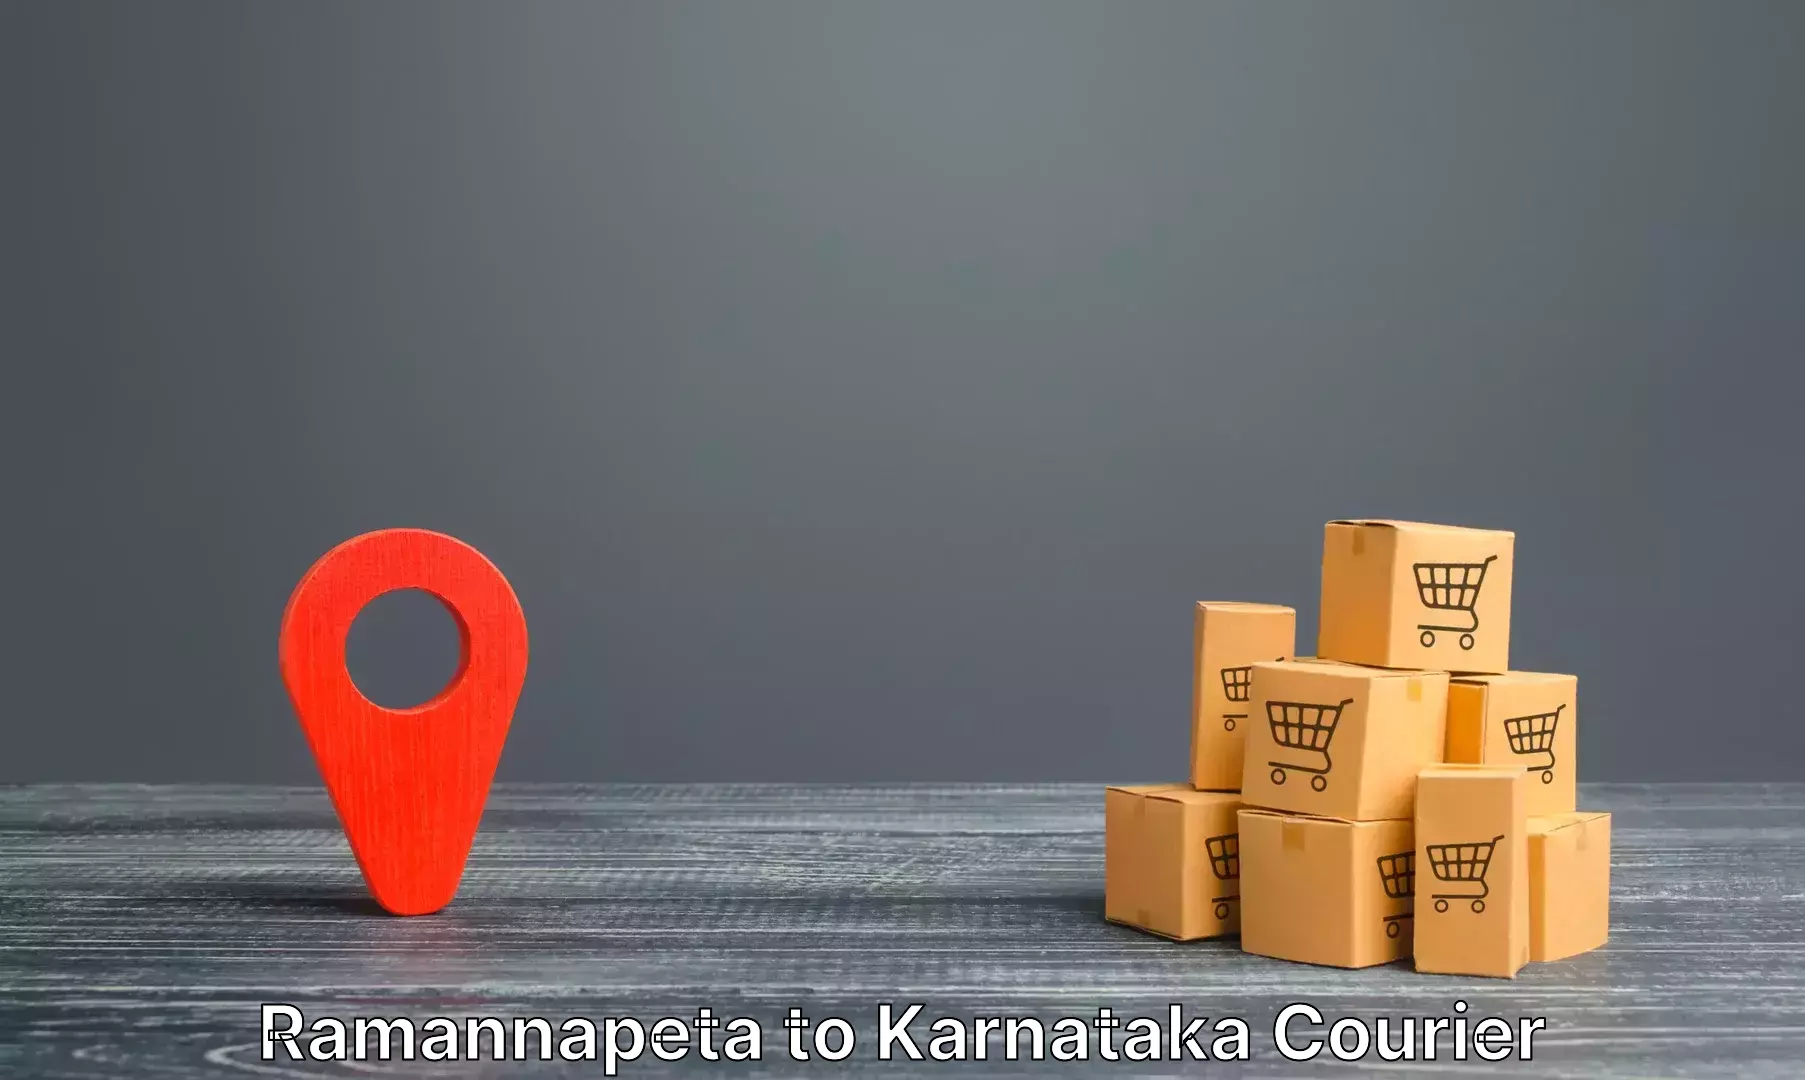 Luggage shipment specialists Ramannapeta to Karnataka